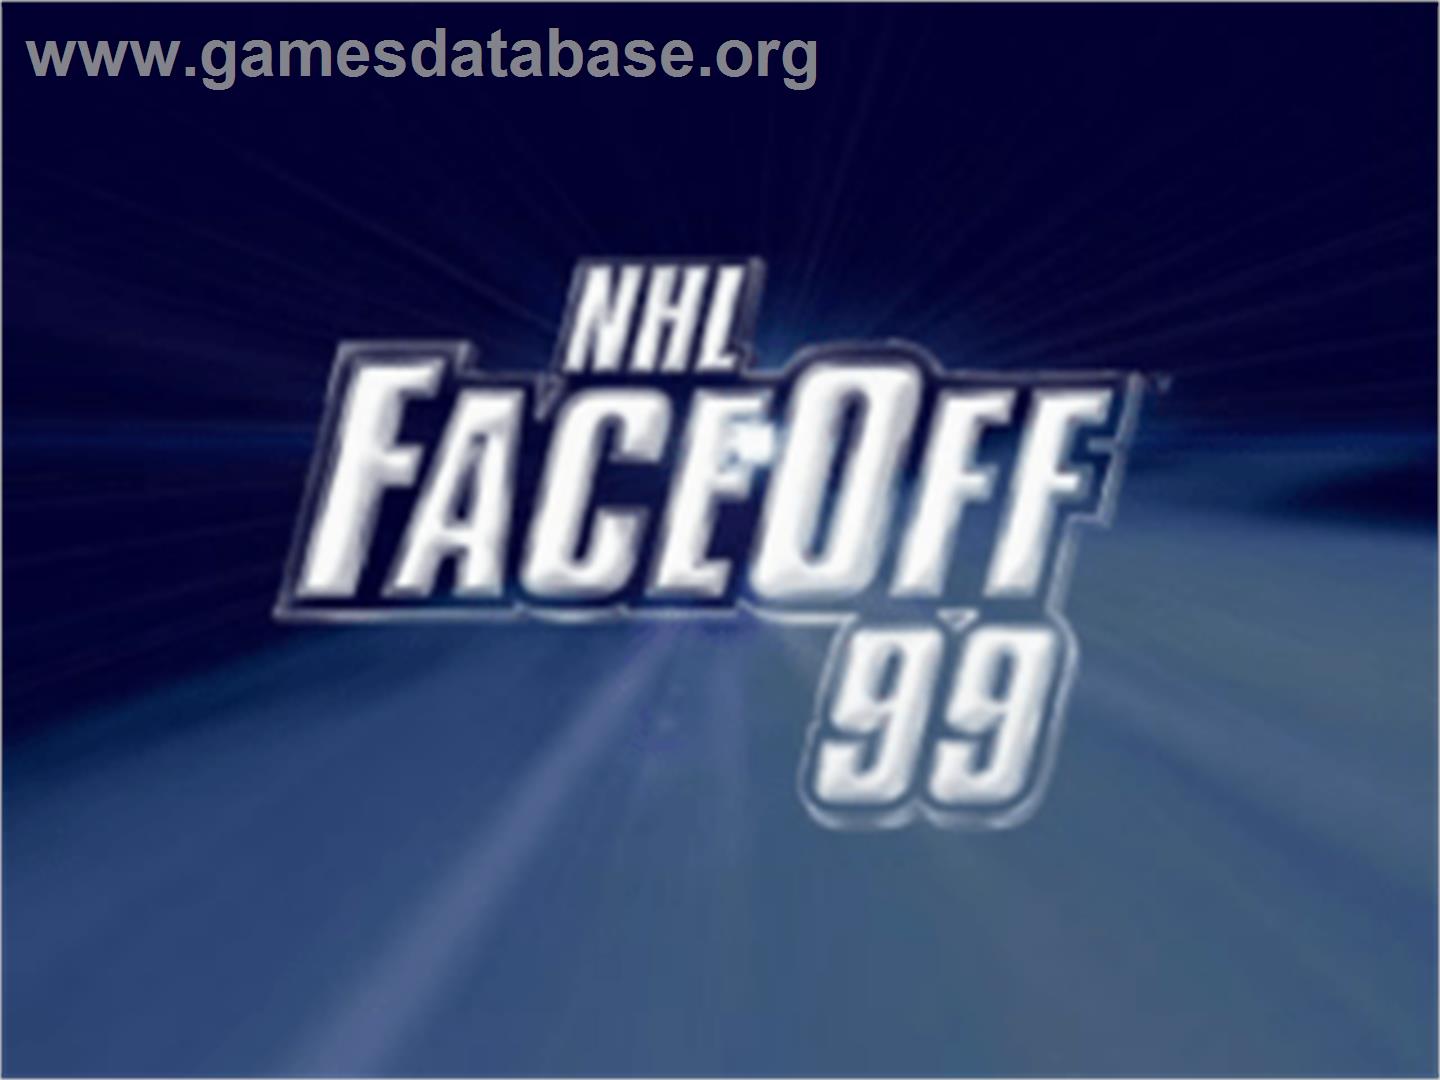 NHL FaceOff '99 - Sony Playstation - Artwork - Title Screen